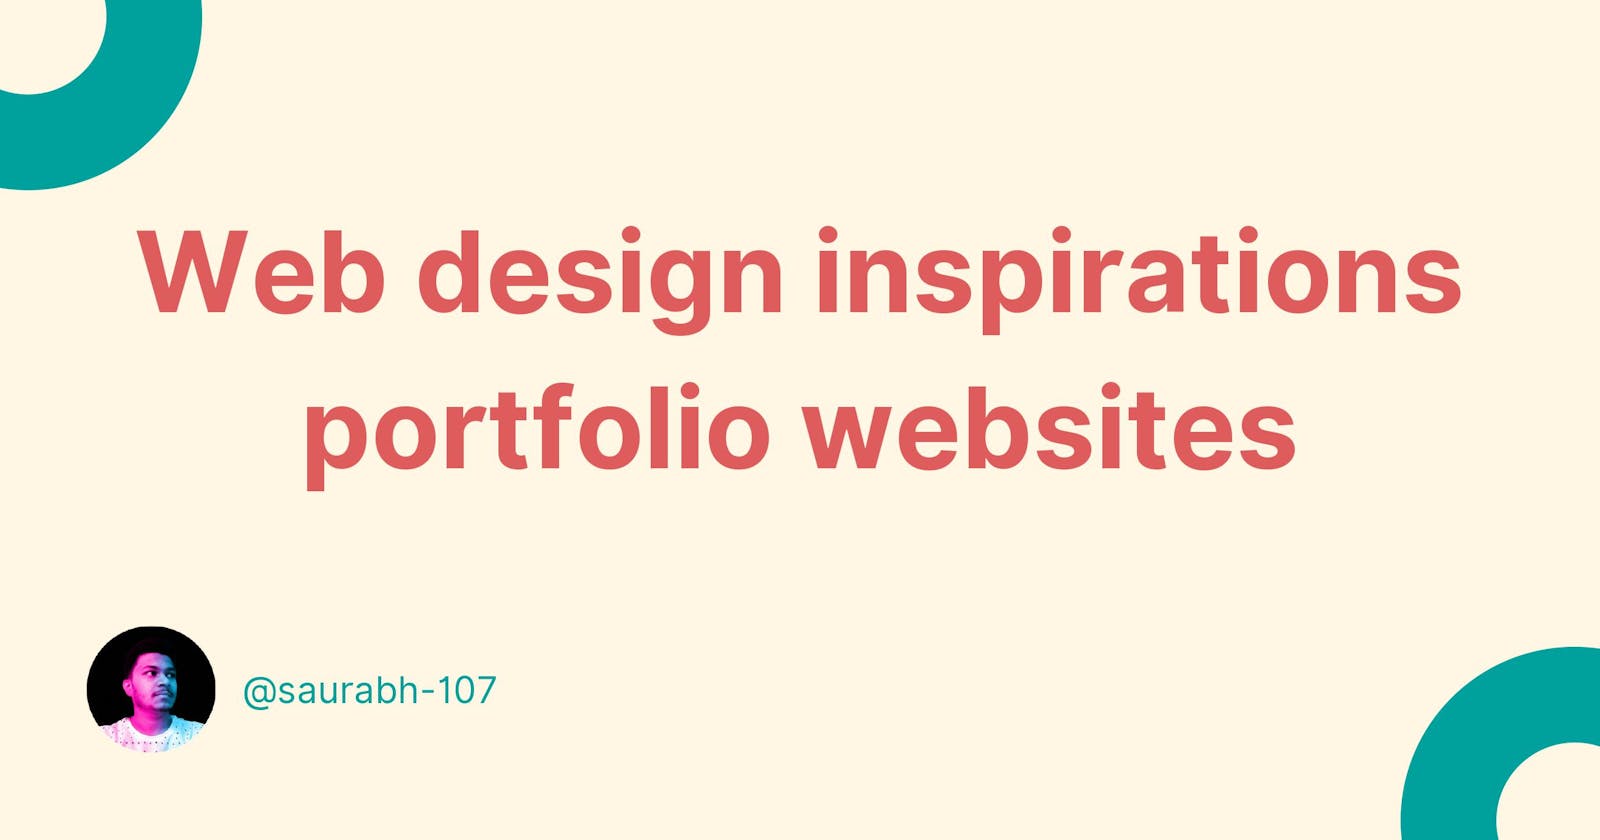 Web design inspirations - portfolio websites